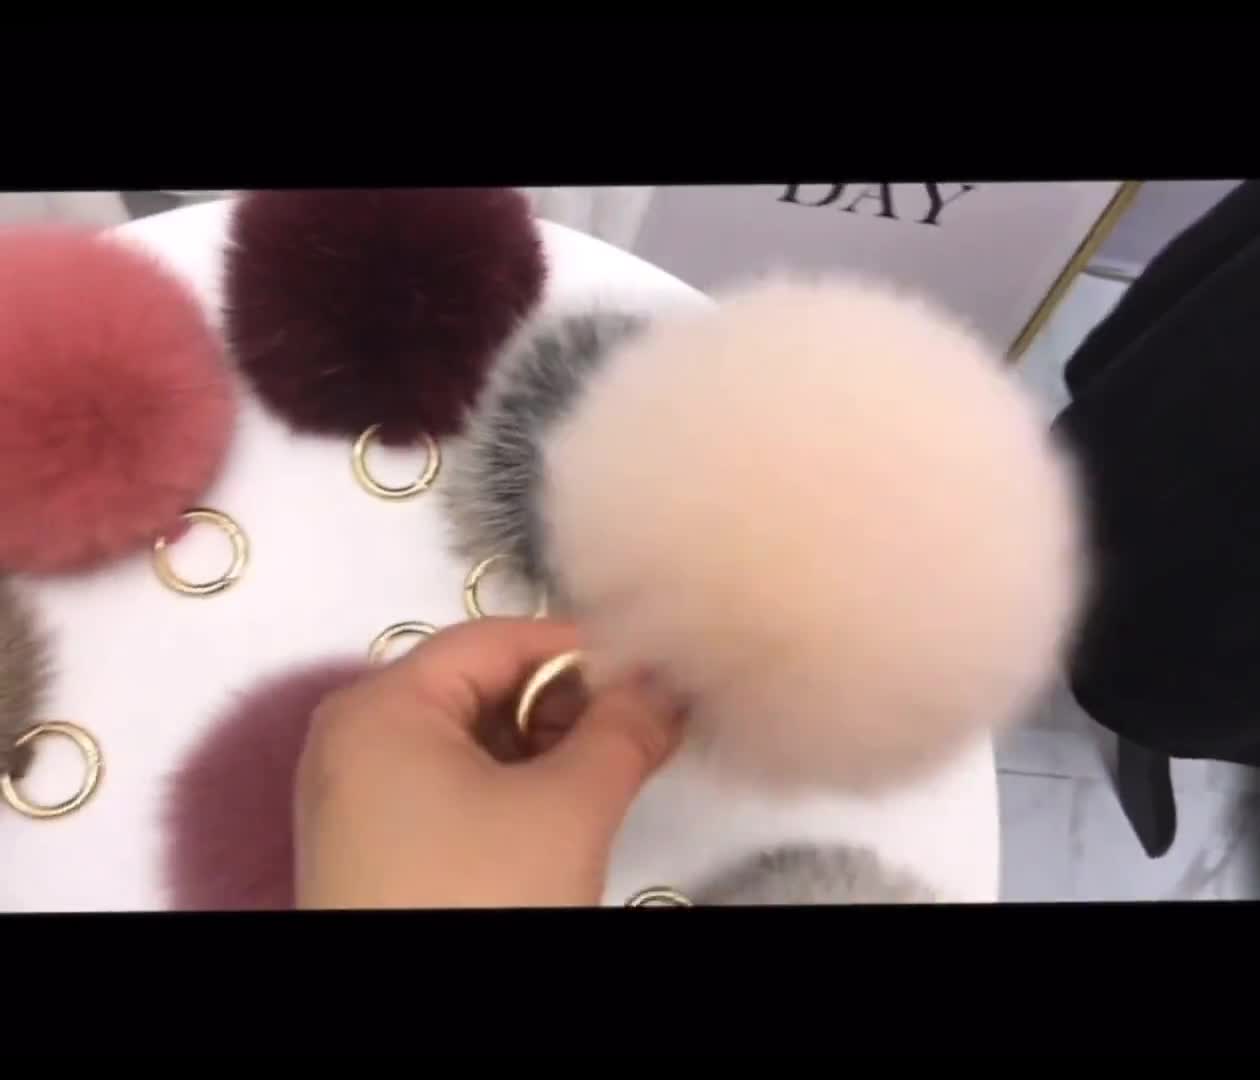 Real Fox Fur Pompom Keychain-furry Key Chain-bag Charm-fur Ball